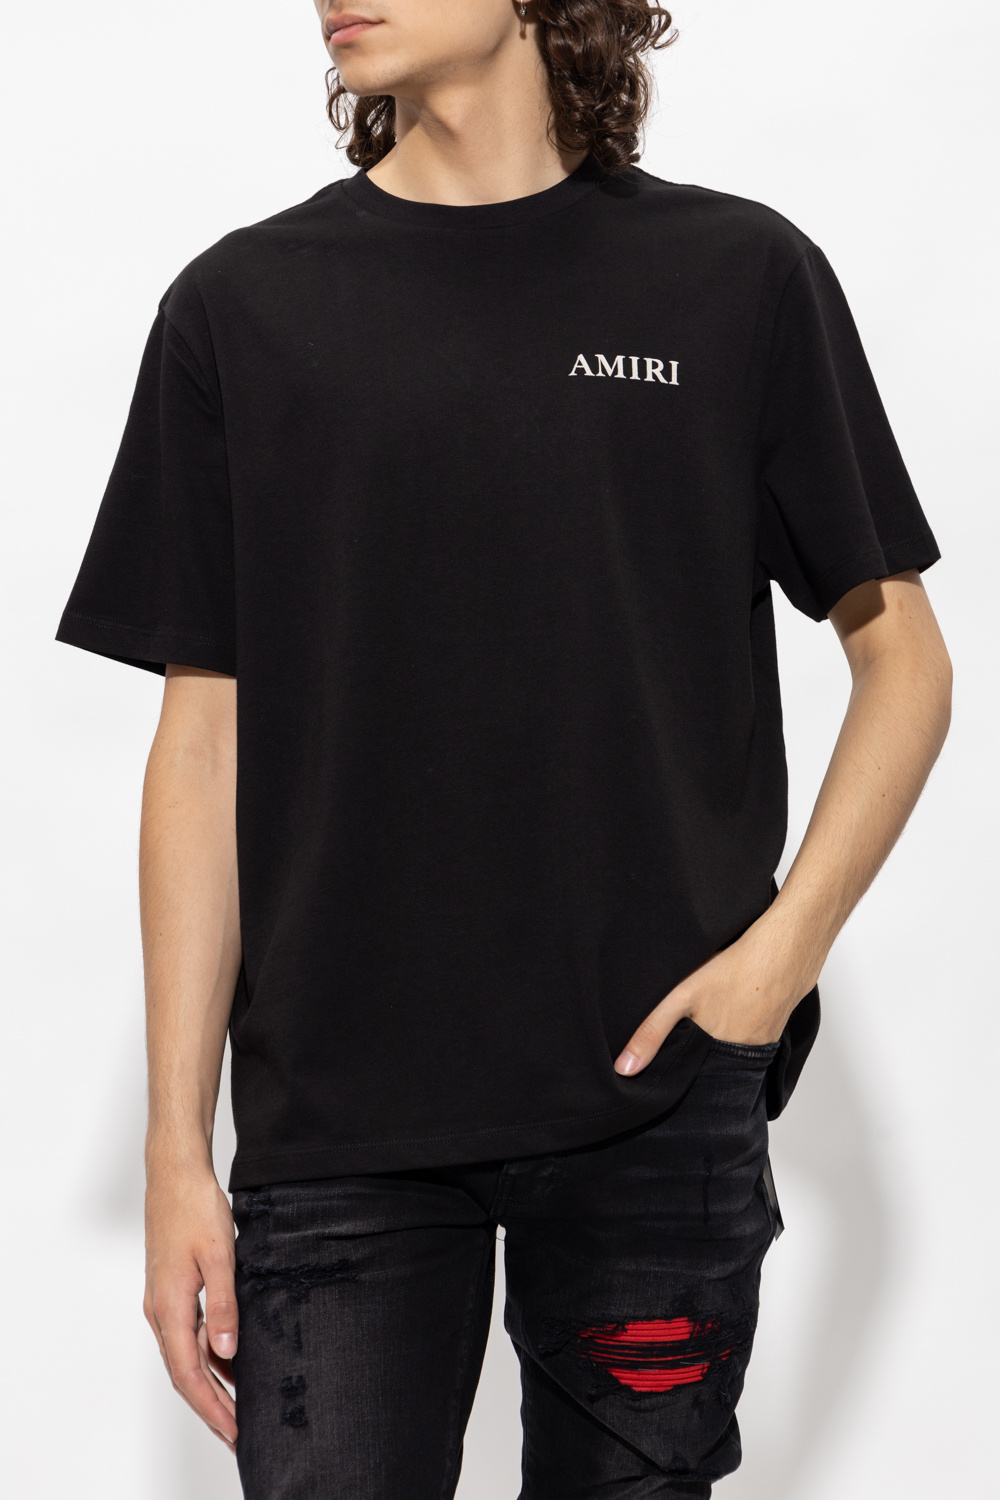 Amiri adidas Performance Runner Men's T-shirt